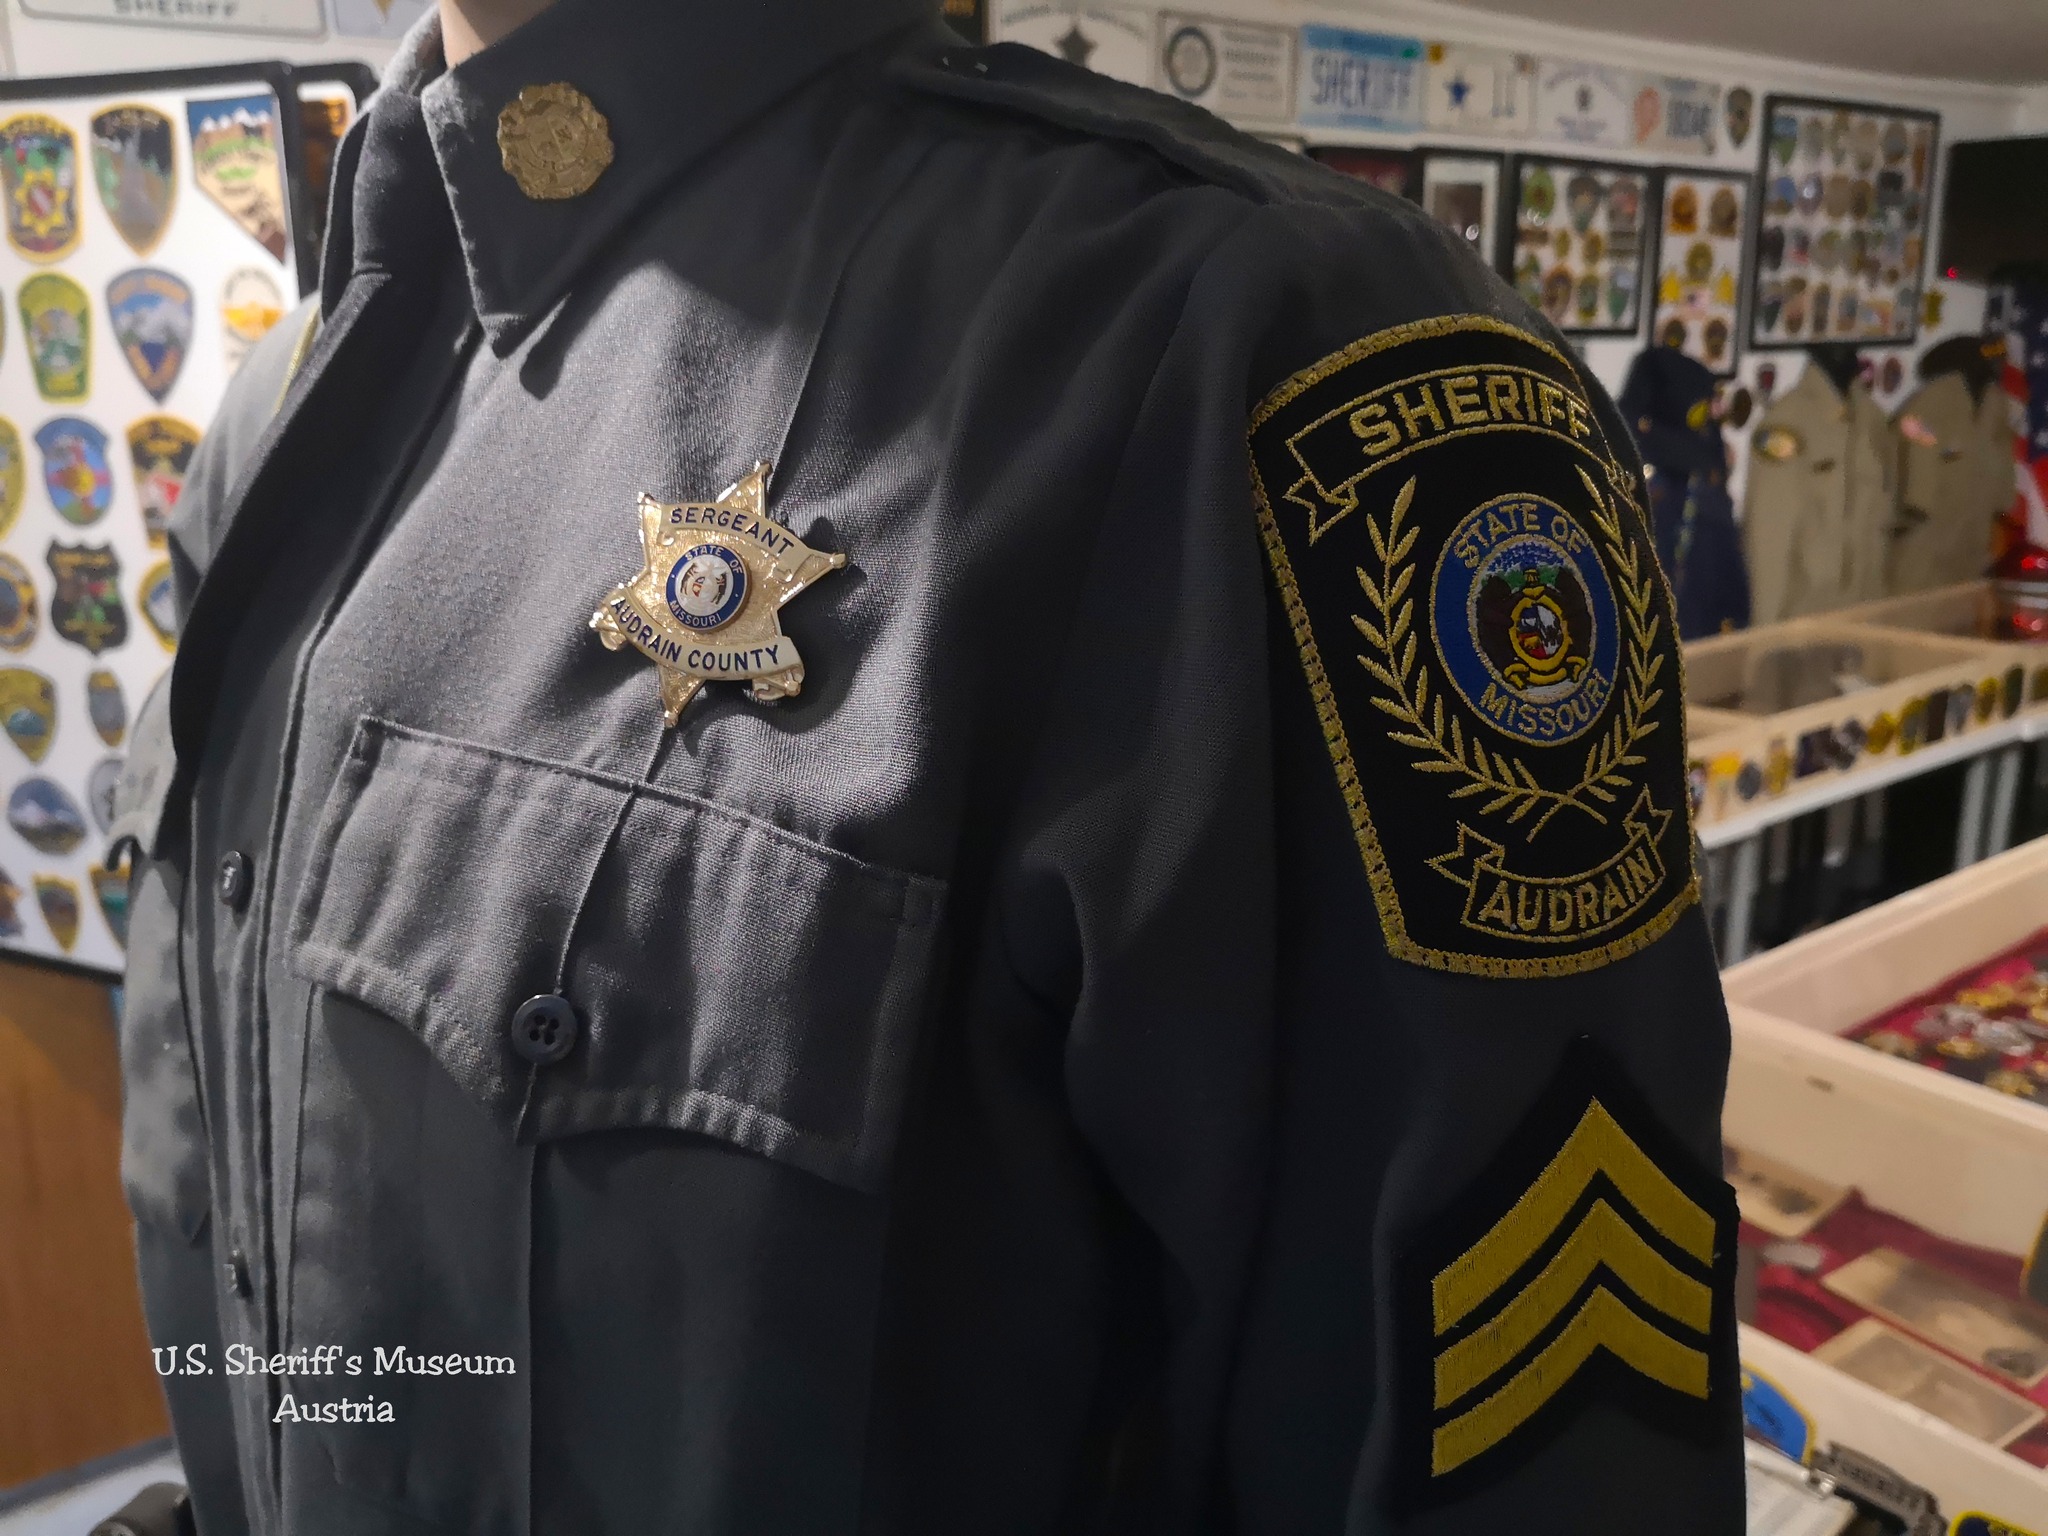 Sheriff Donates Uniform to Austrian Museum